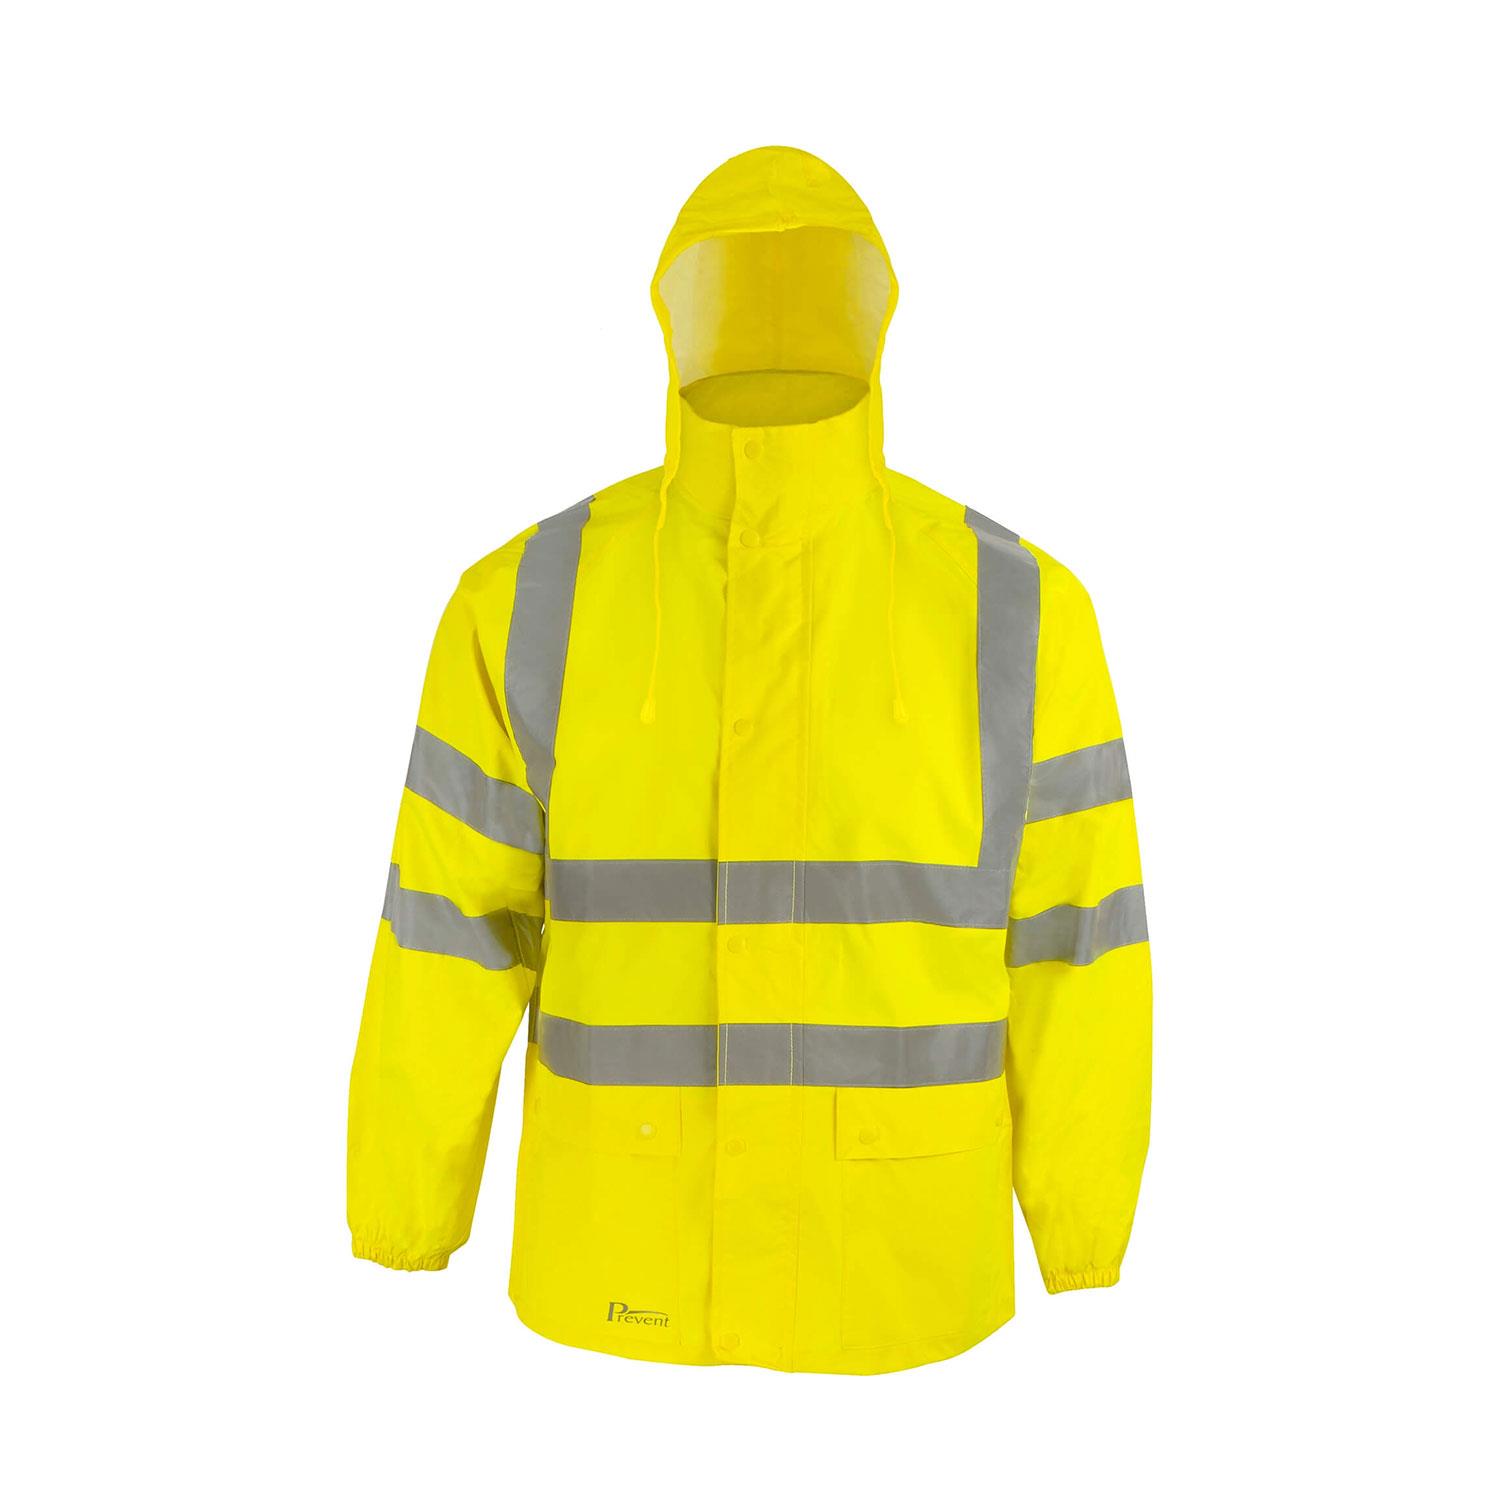 PREVENT® Warnschutz-Regenbekleidung RJG, gelb, Gr. L